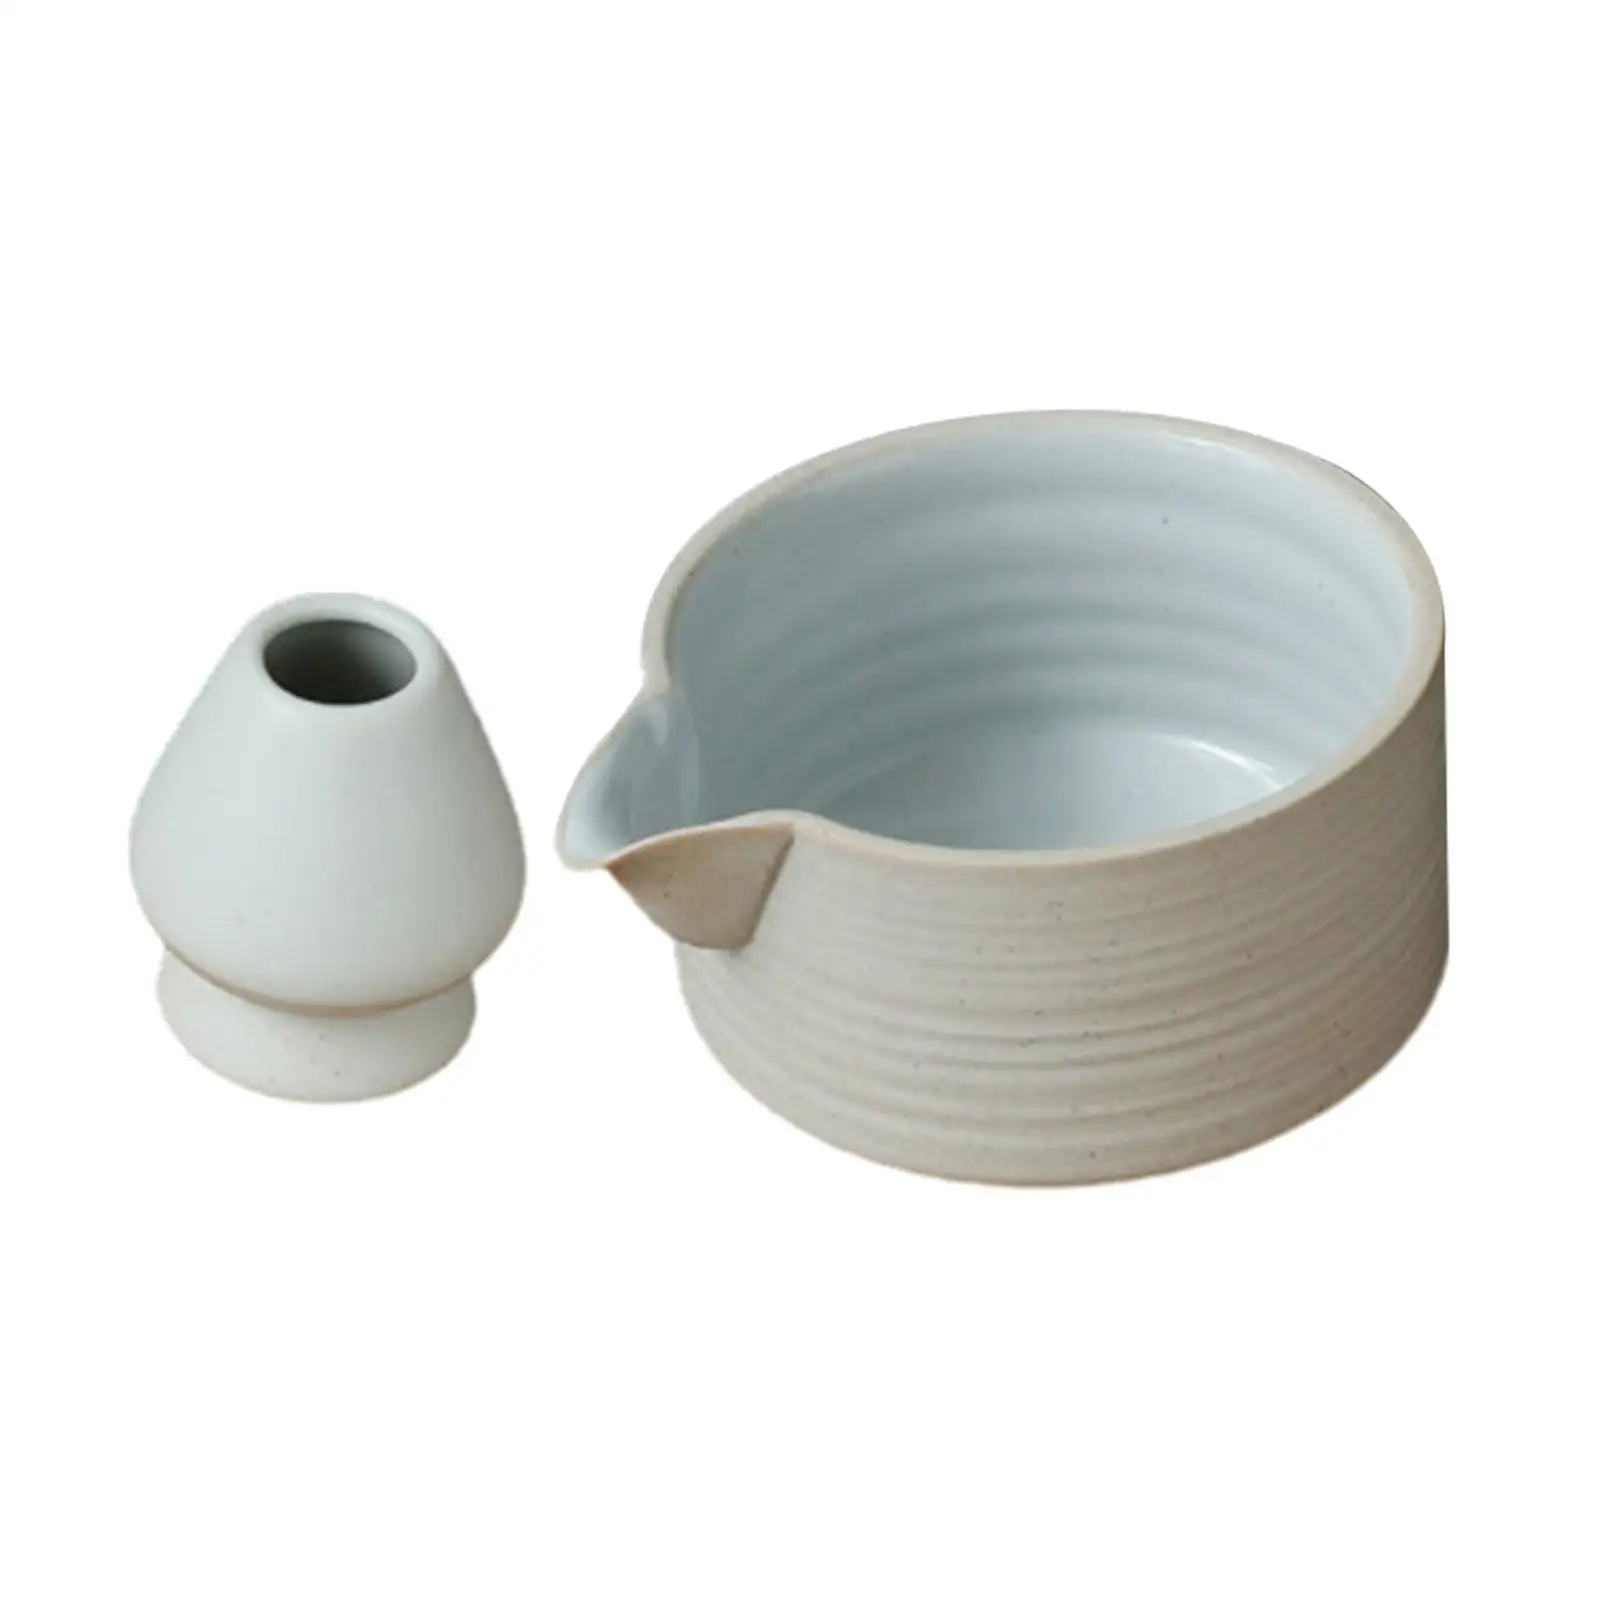 2x Japanese Ceramic Matcha Bowl Matcha Ceramic Bowl for Japanese Matcha Preparation Beverage Tea Lovers Holiday Gift